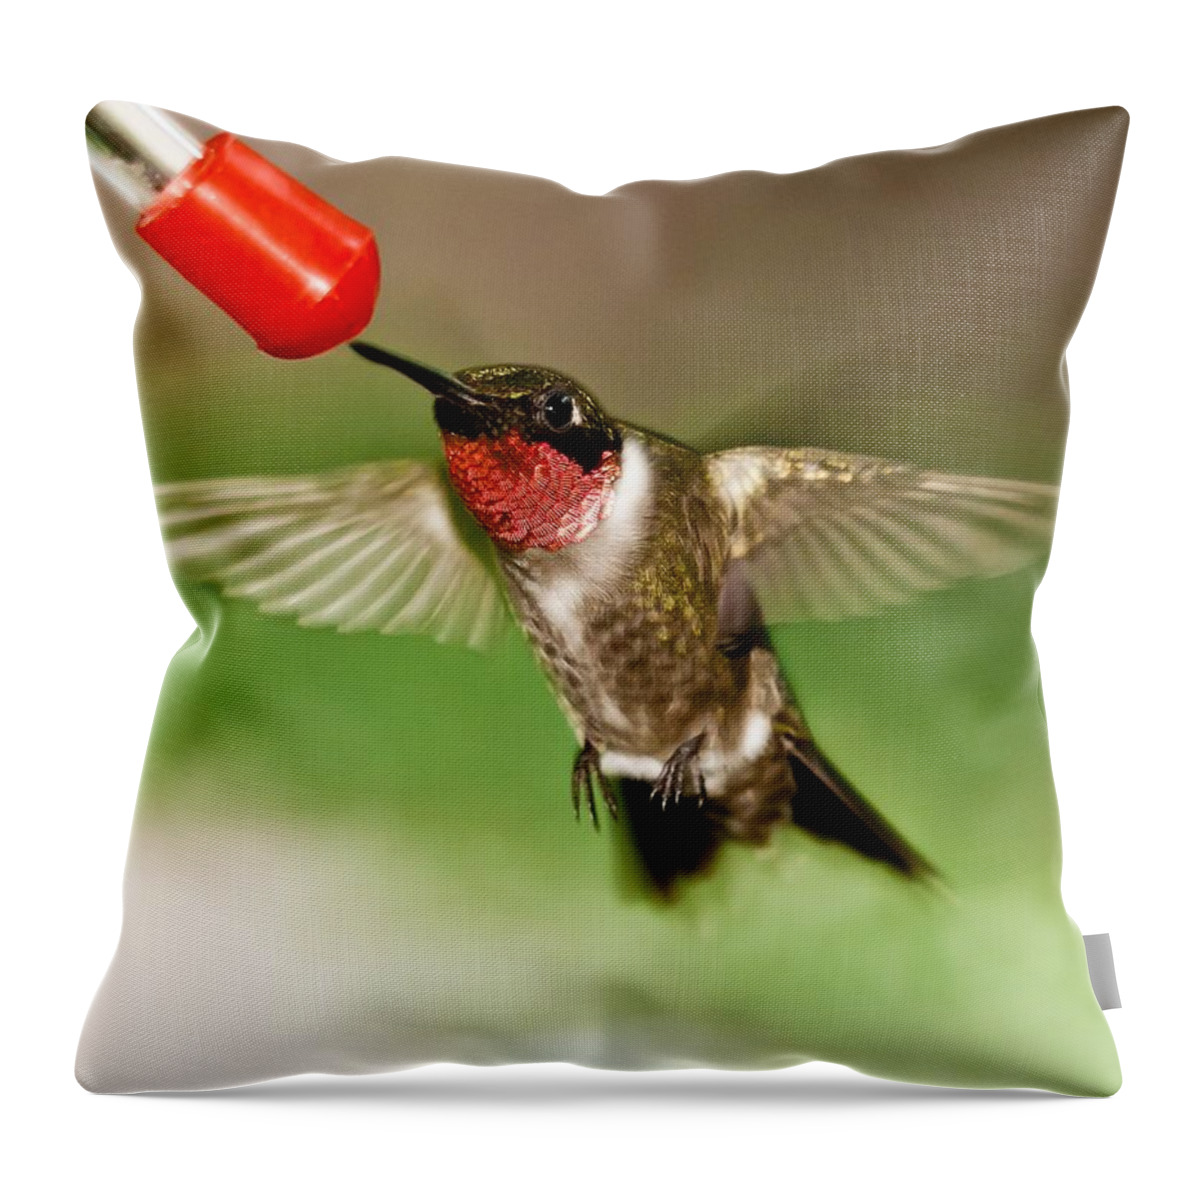 Hummingbird Throw Pillow featuring the photograph Hummingbird by Robert L Jackson